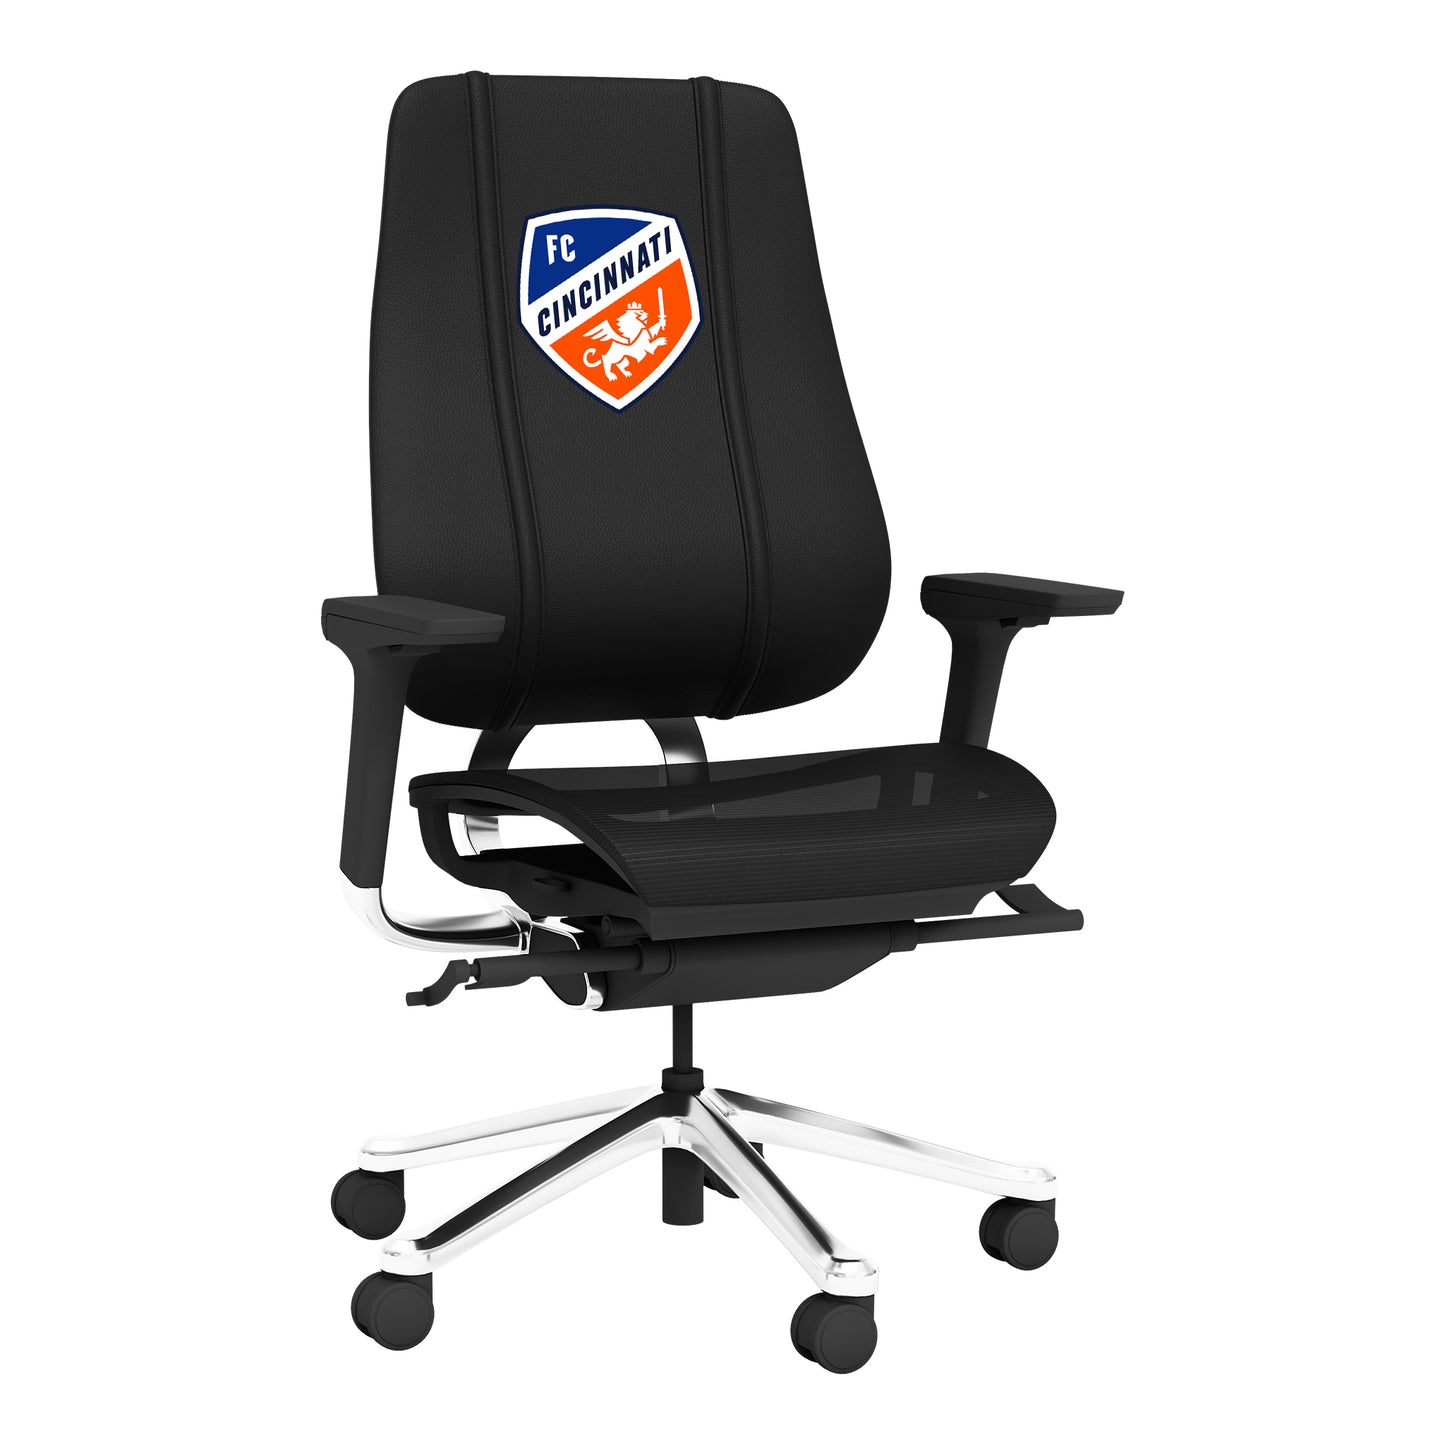 Phantomx Mesh Gaming Chair with FC Cincinnati Logo